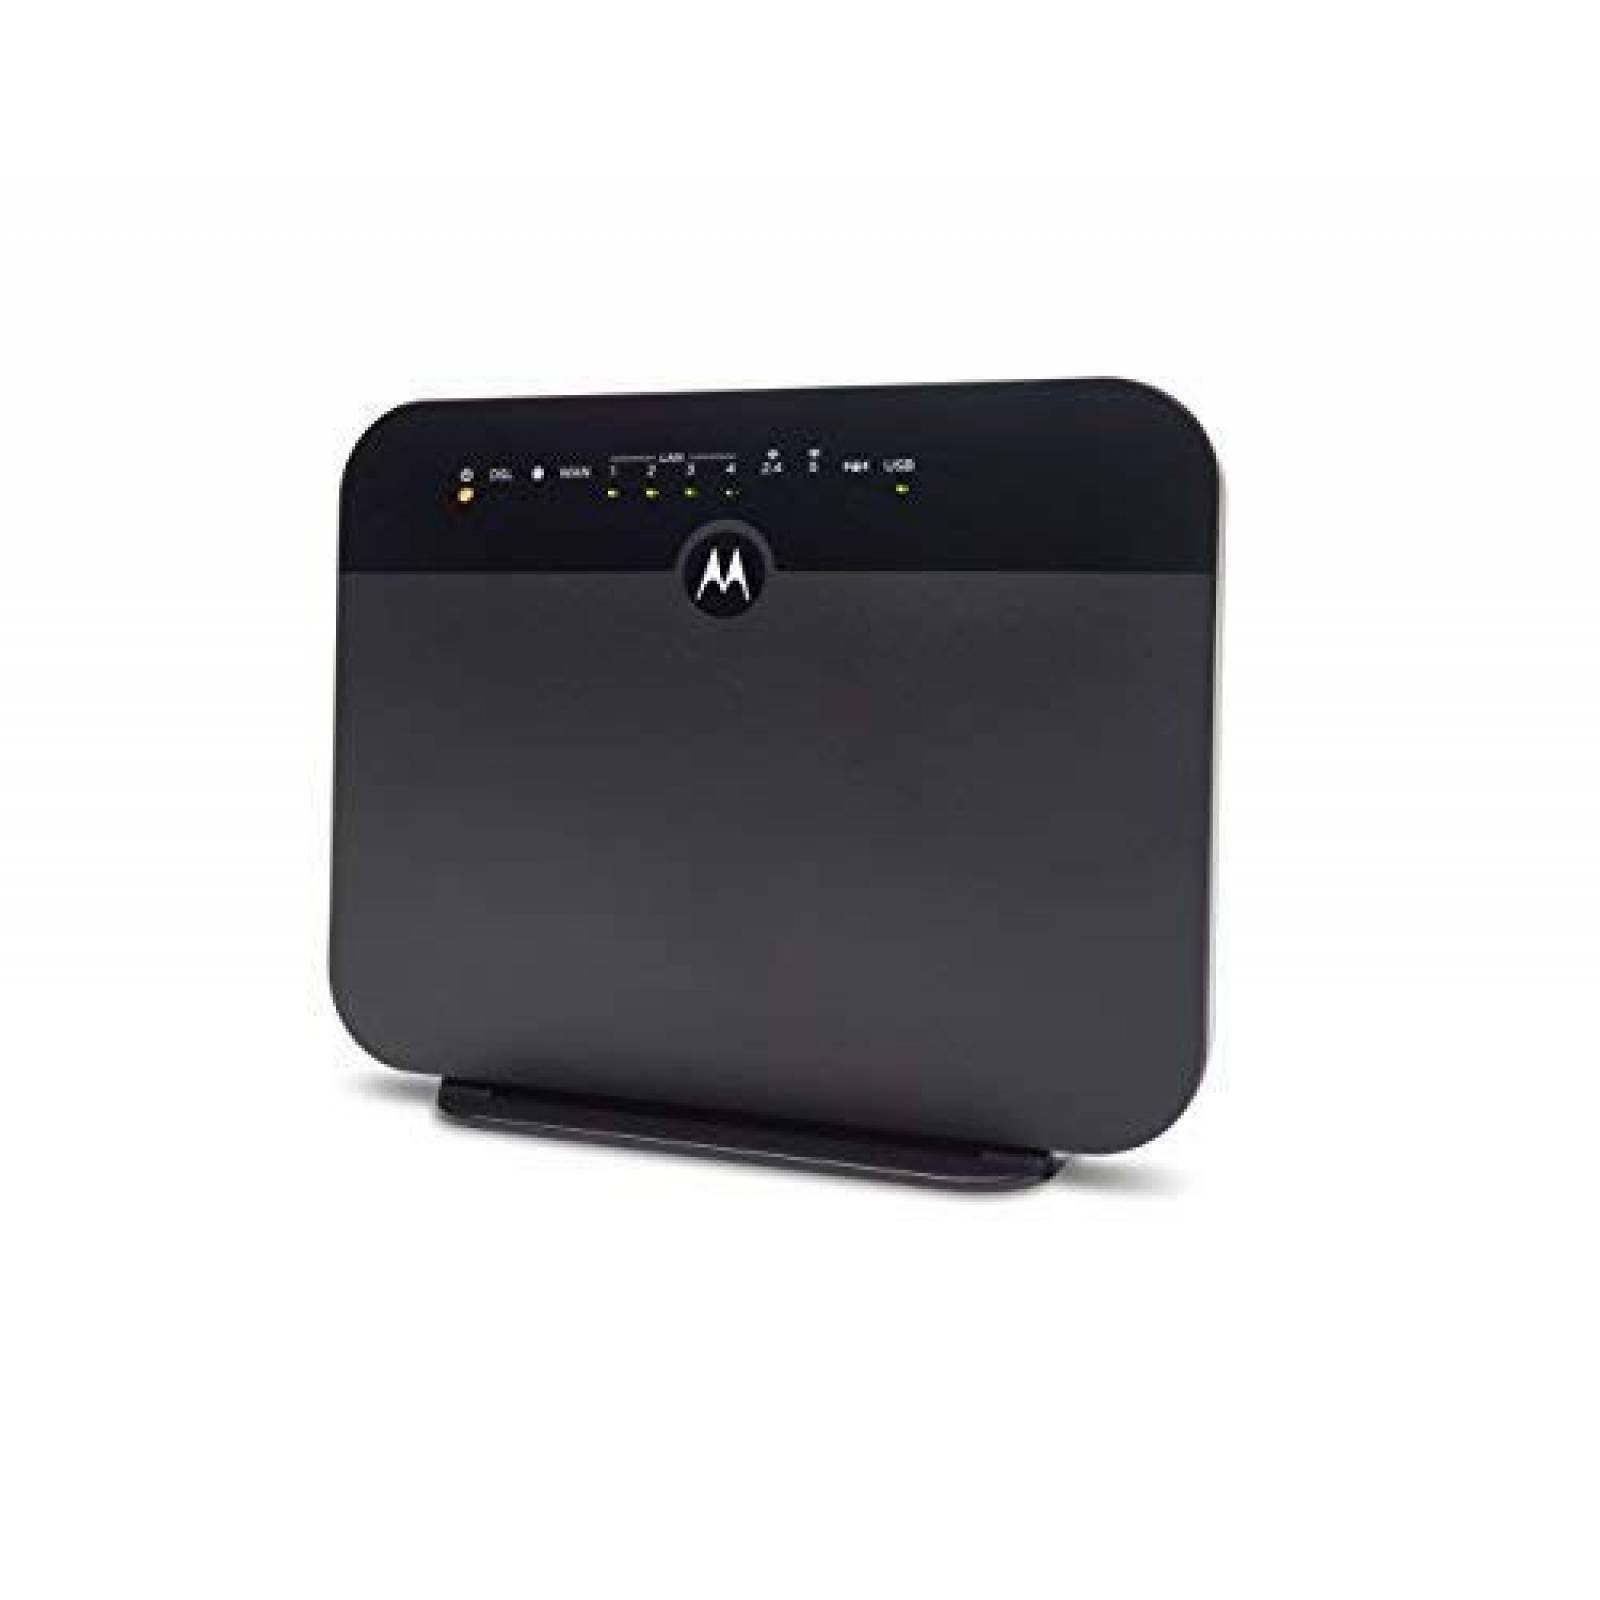 Router Motorola MD1600 Wifi AC1600 Gigabit DSL